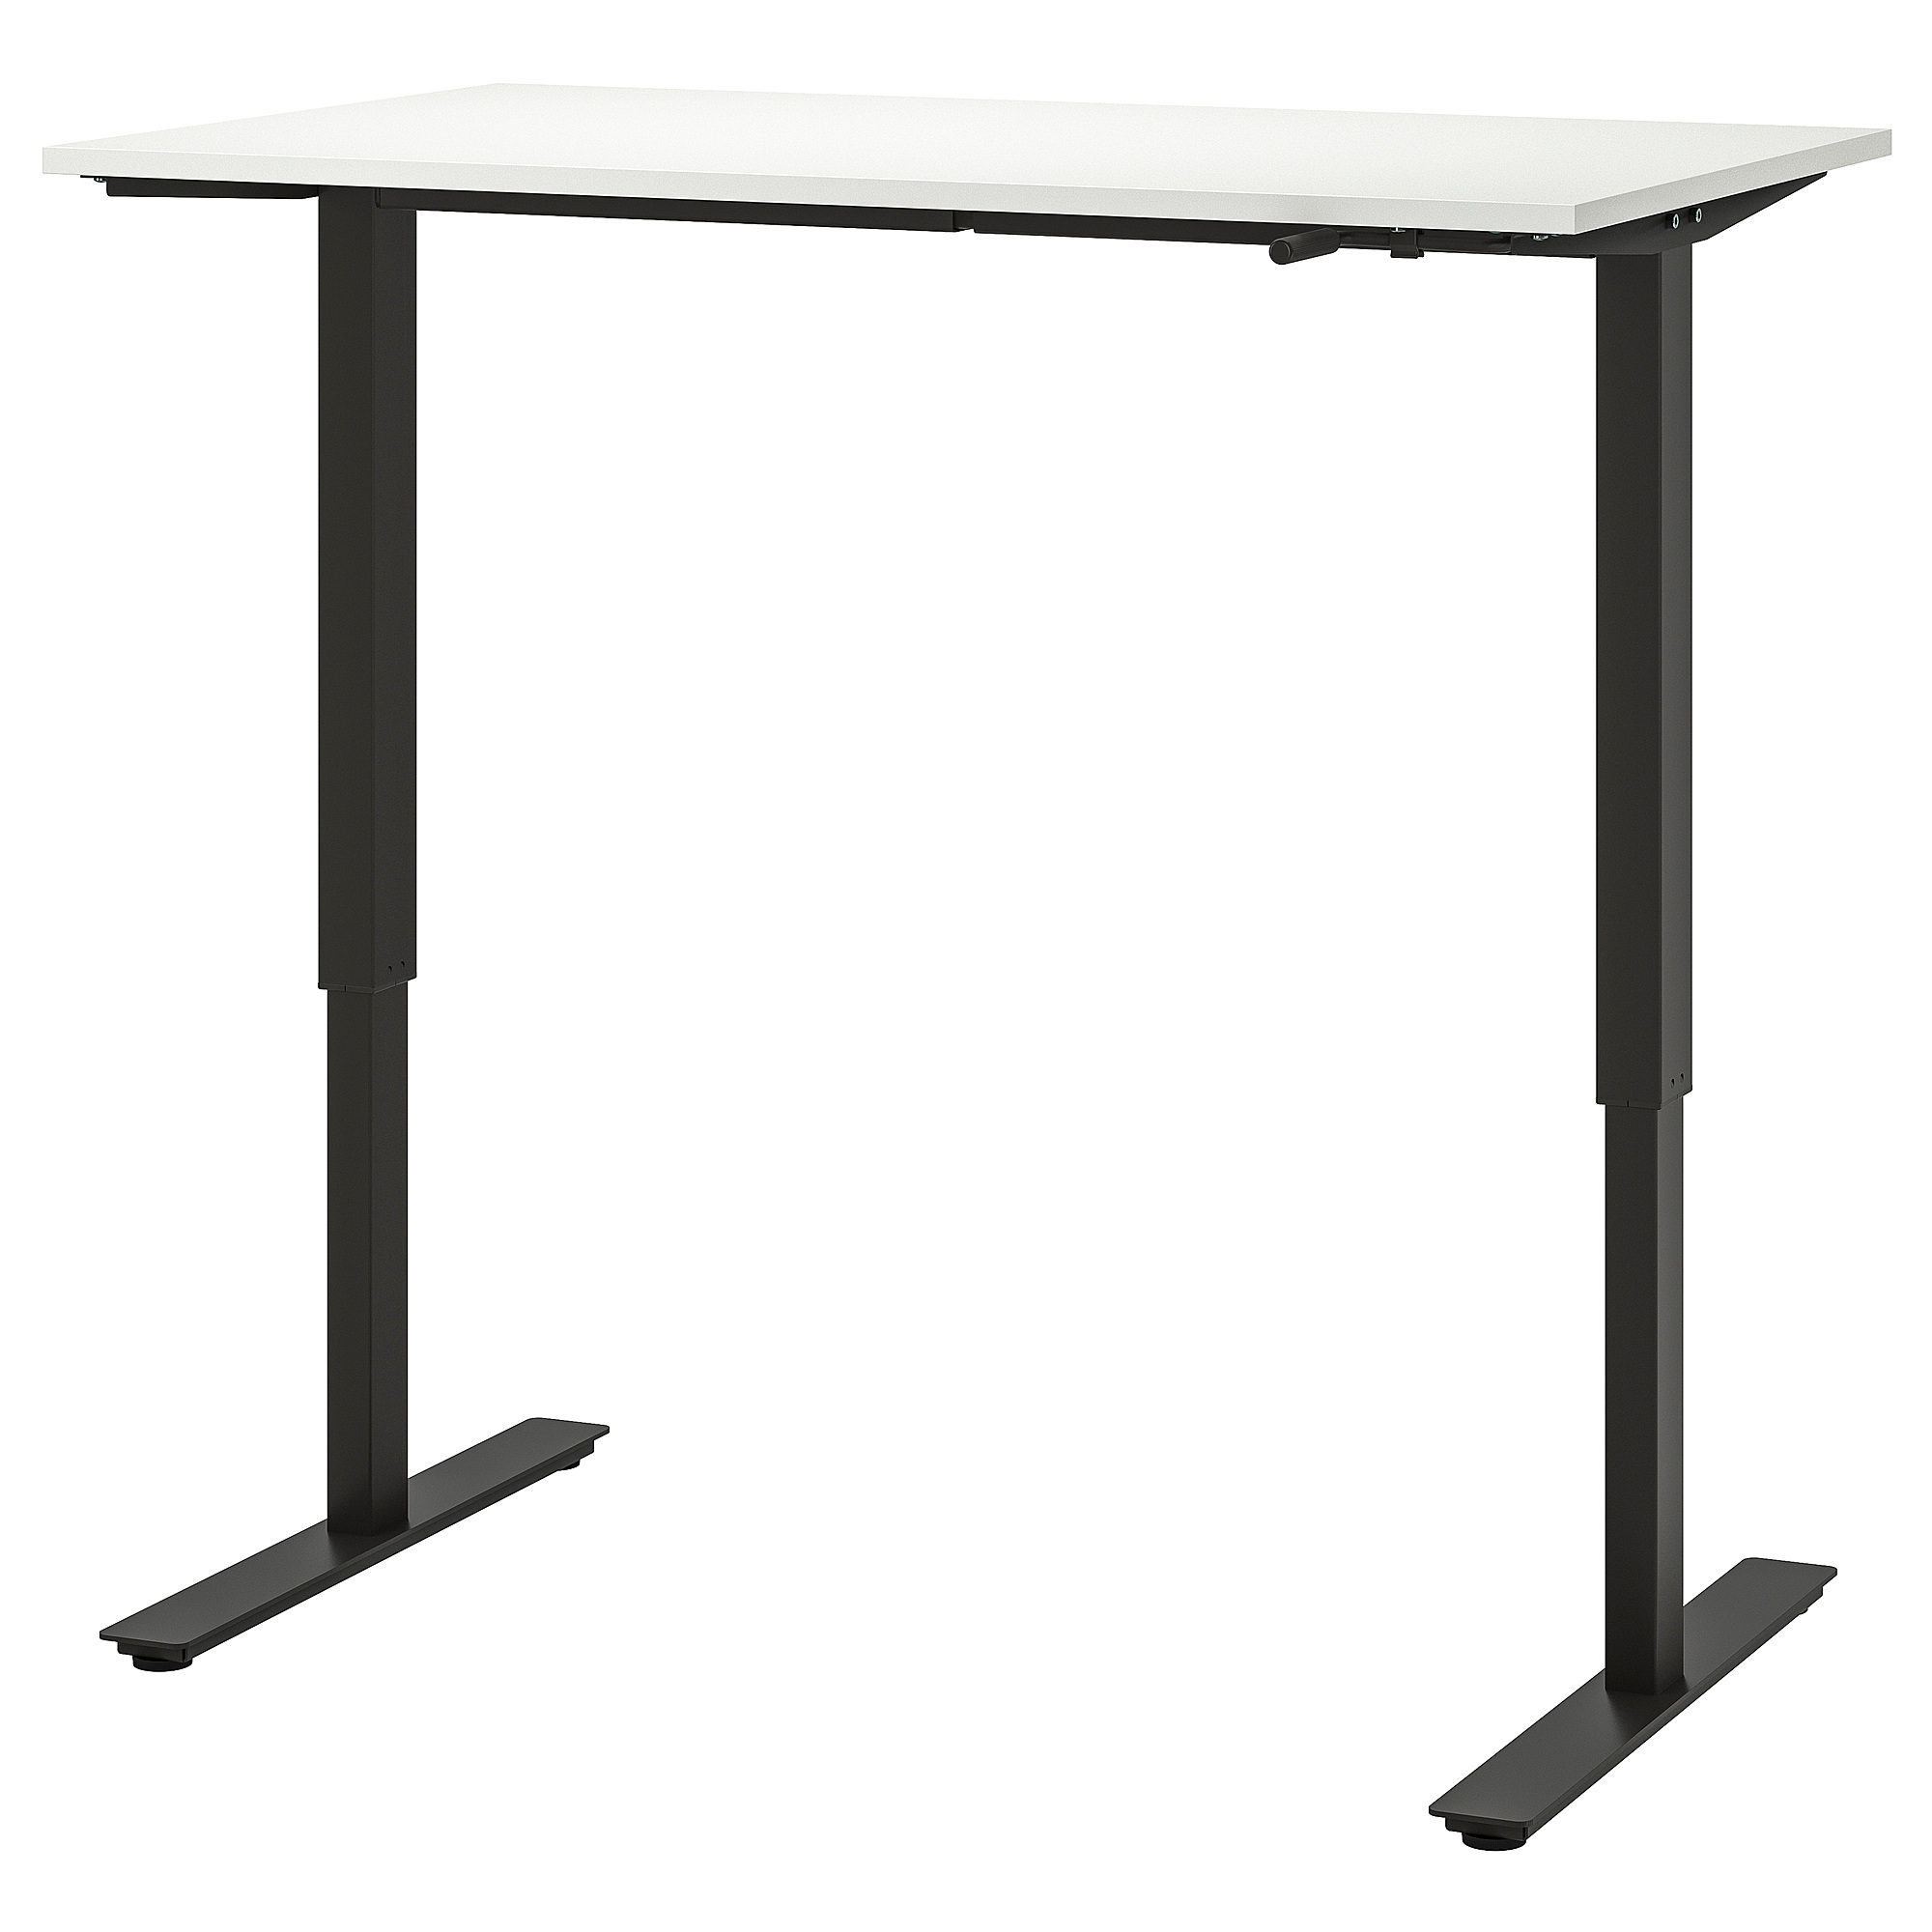 TROTTEN desk sit/stand